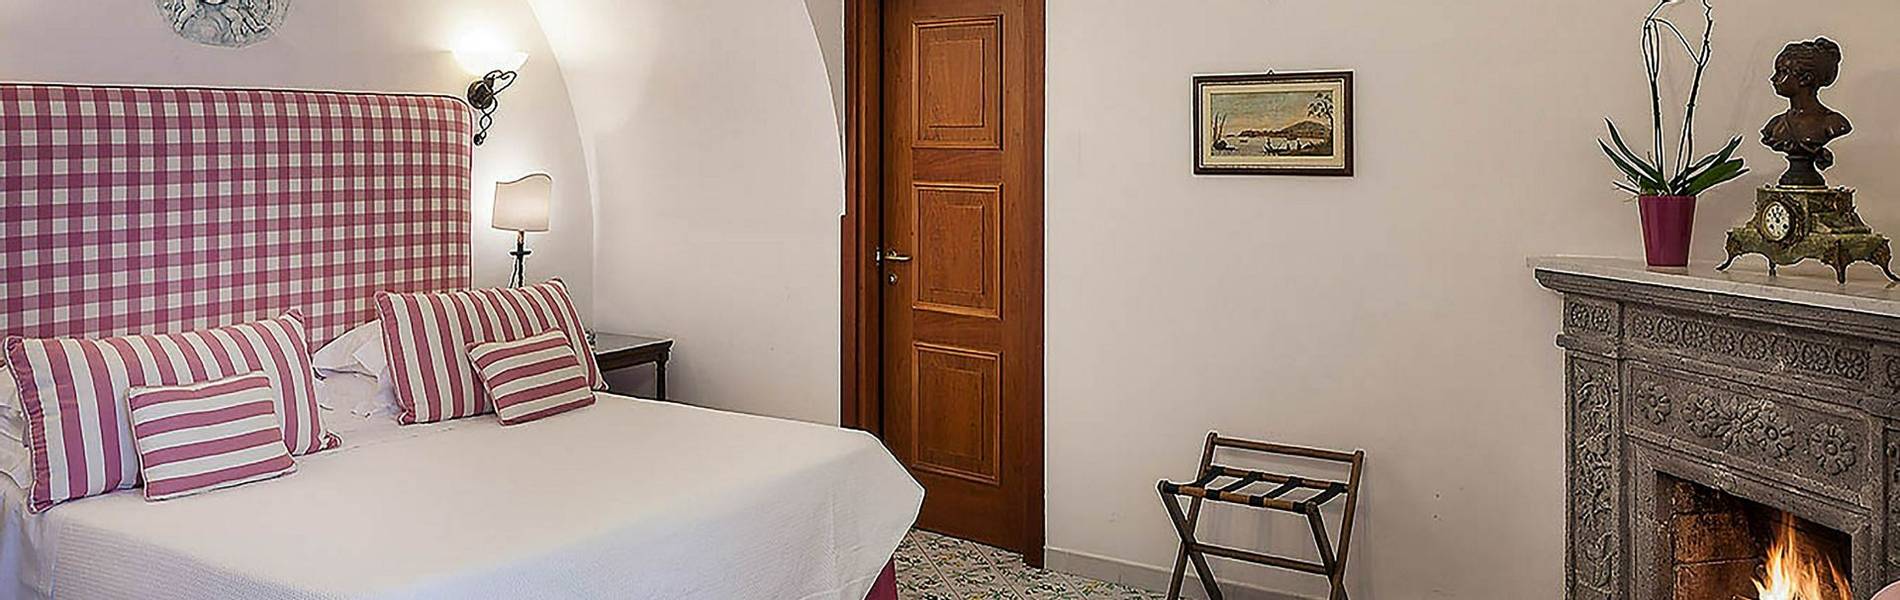 Villa Maria, Amalfi Coast, Italy, superior-room.jpg